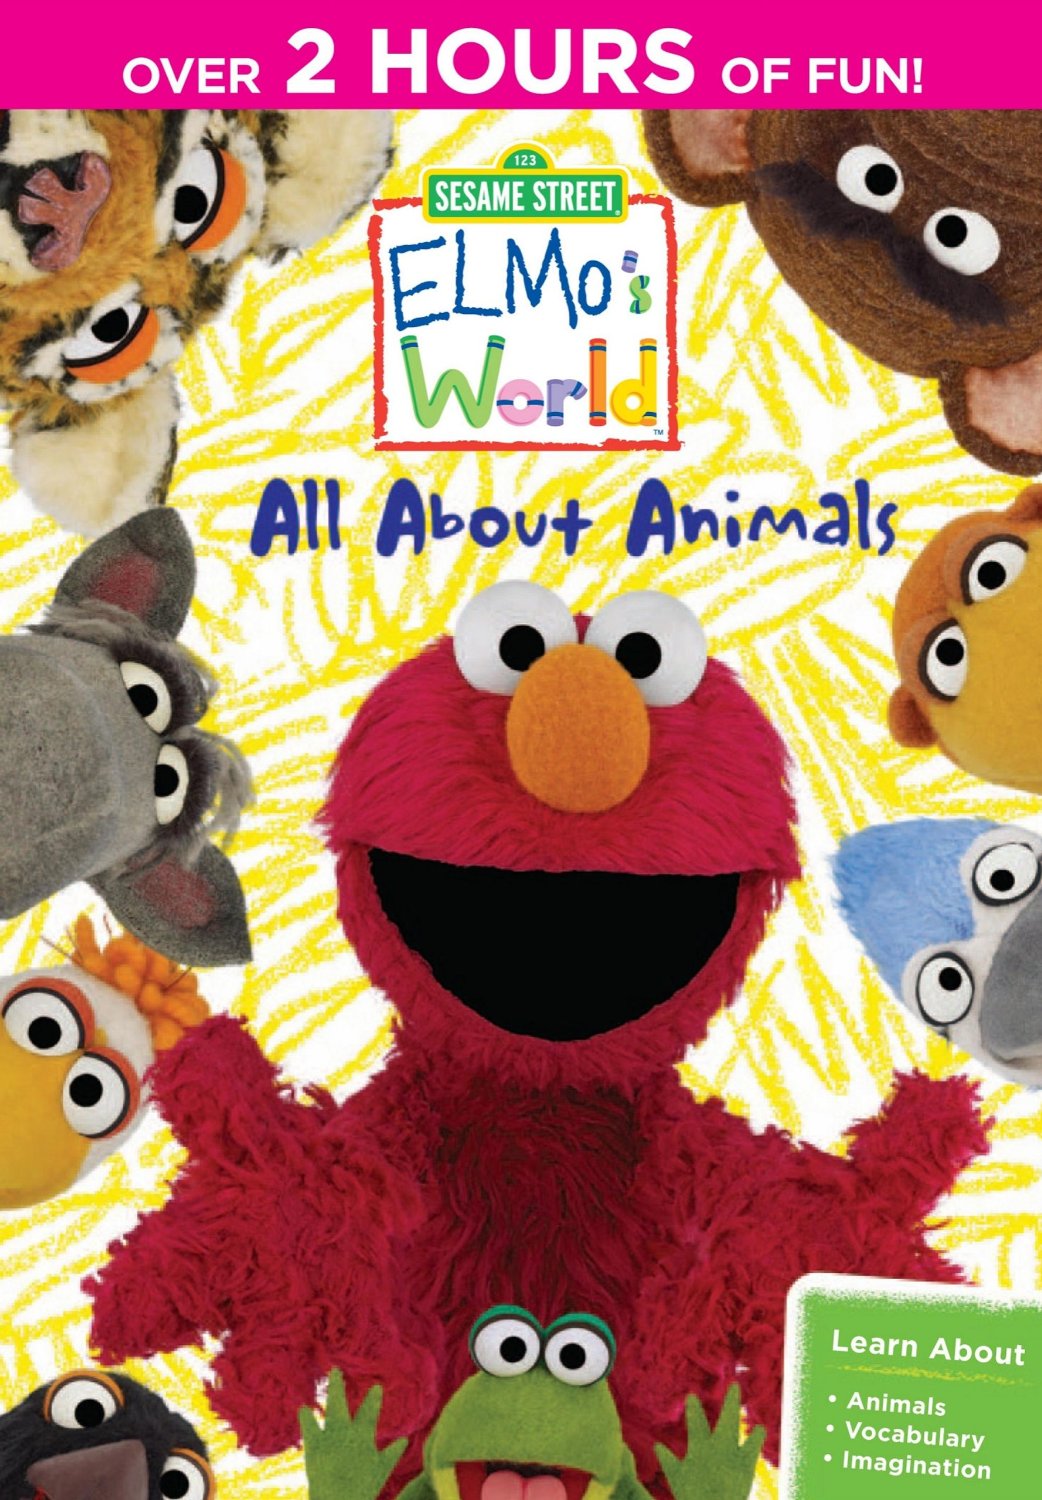 Elmo's World: All About Animals | Muppet Wiki | Fandom powered by Wikia